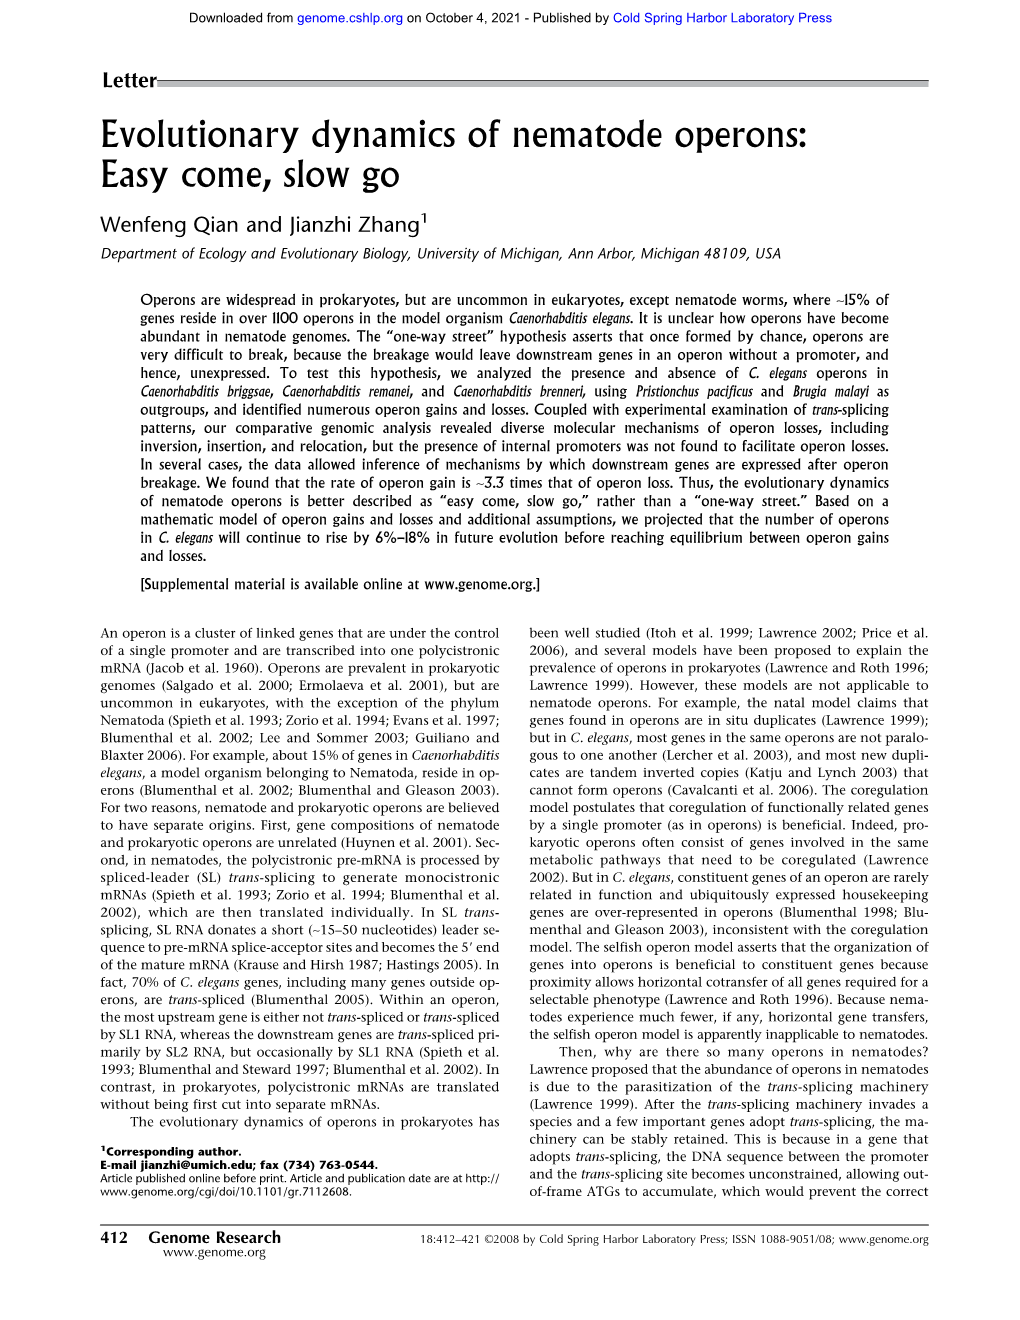 Evolutionary Dynamics of Nematode Operons: Easy Come, Slow Go